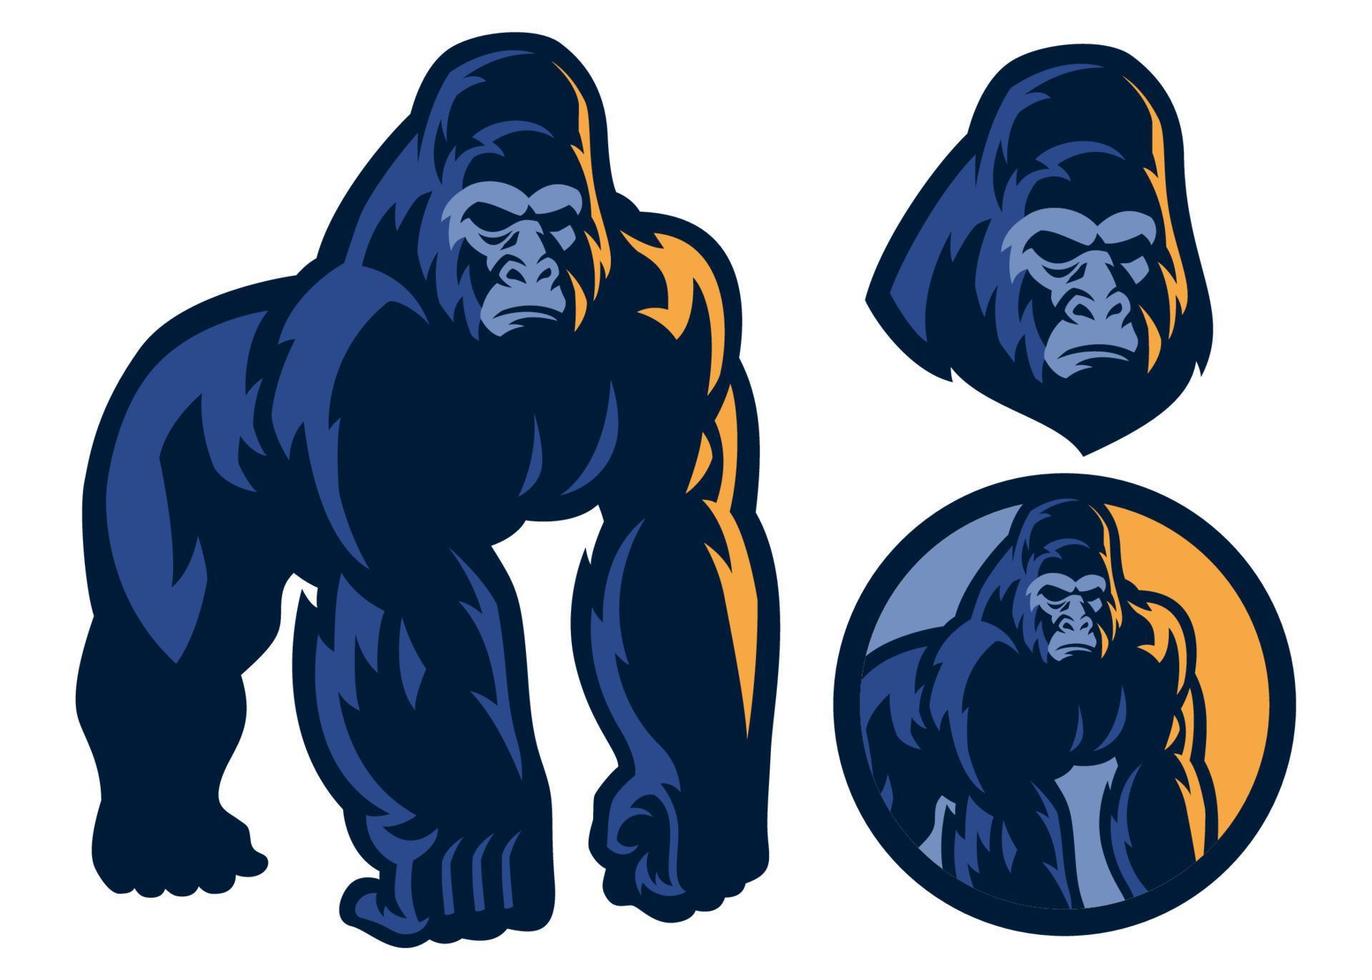 grande músculo corpo do gorila mascote vetor